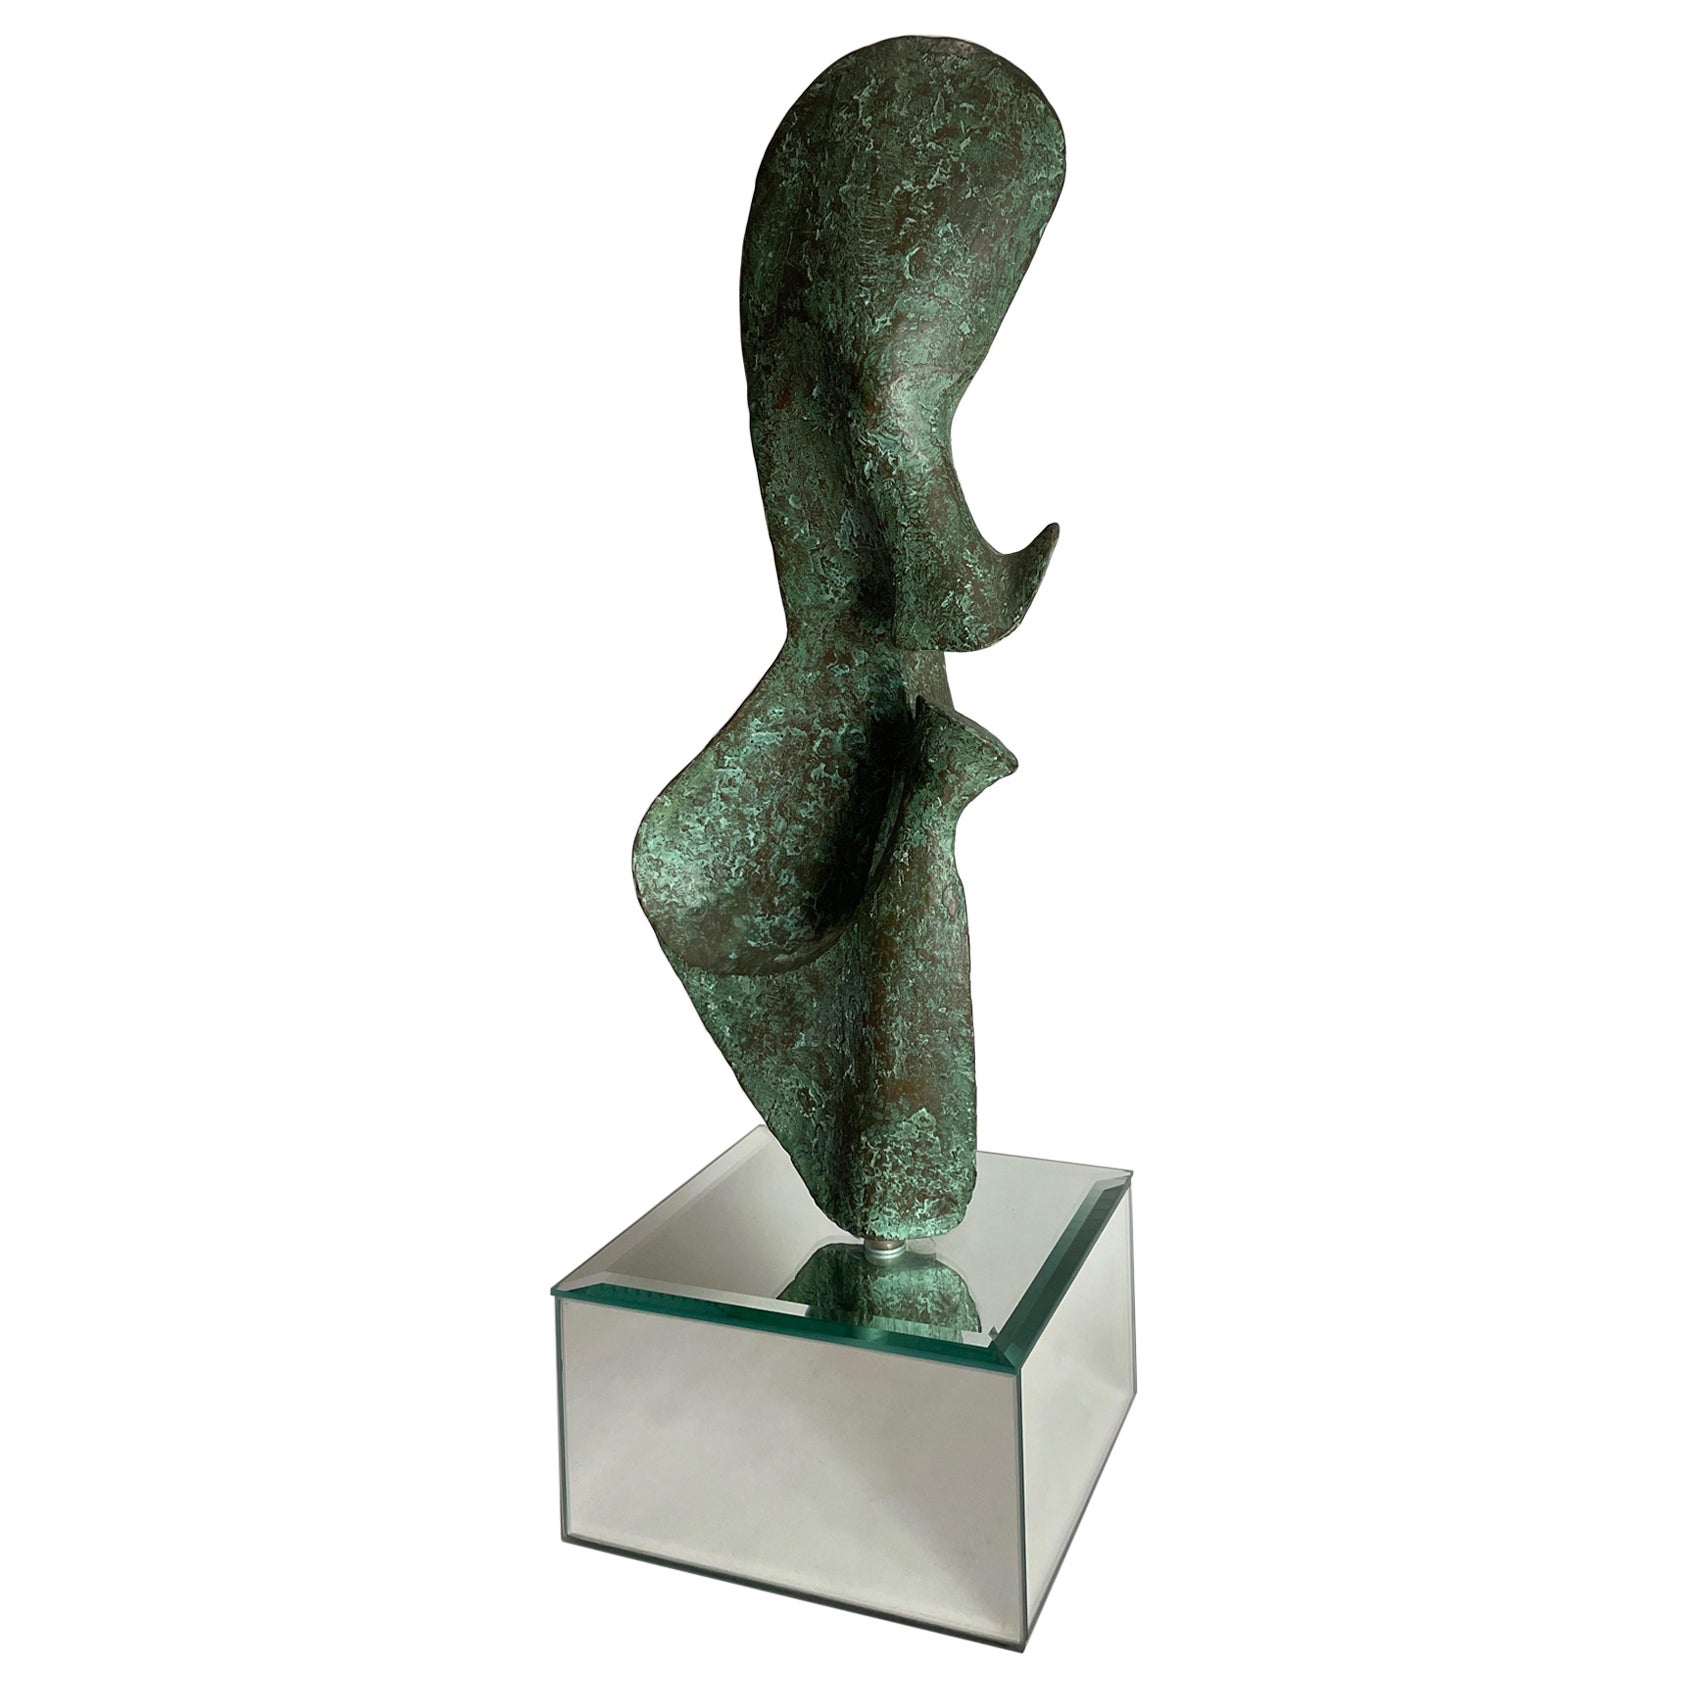 Sculpture en bronze de Leonardo Nierman, signée et numérotée